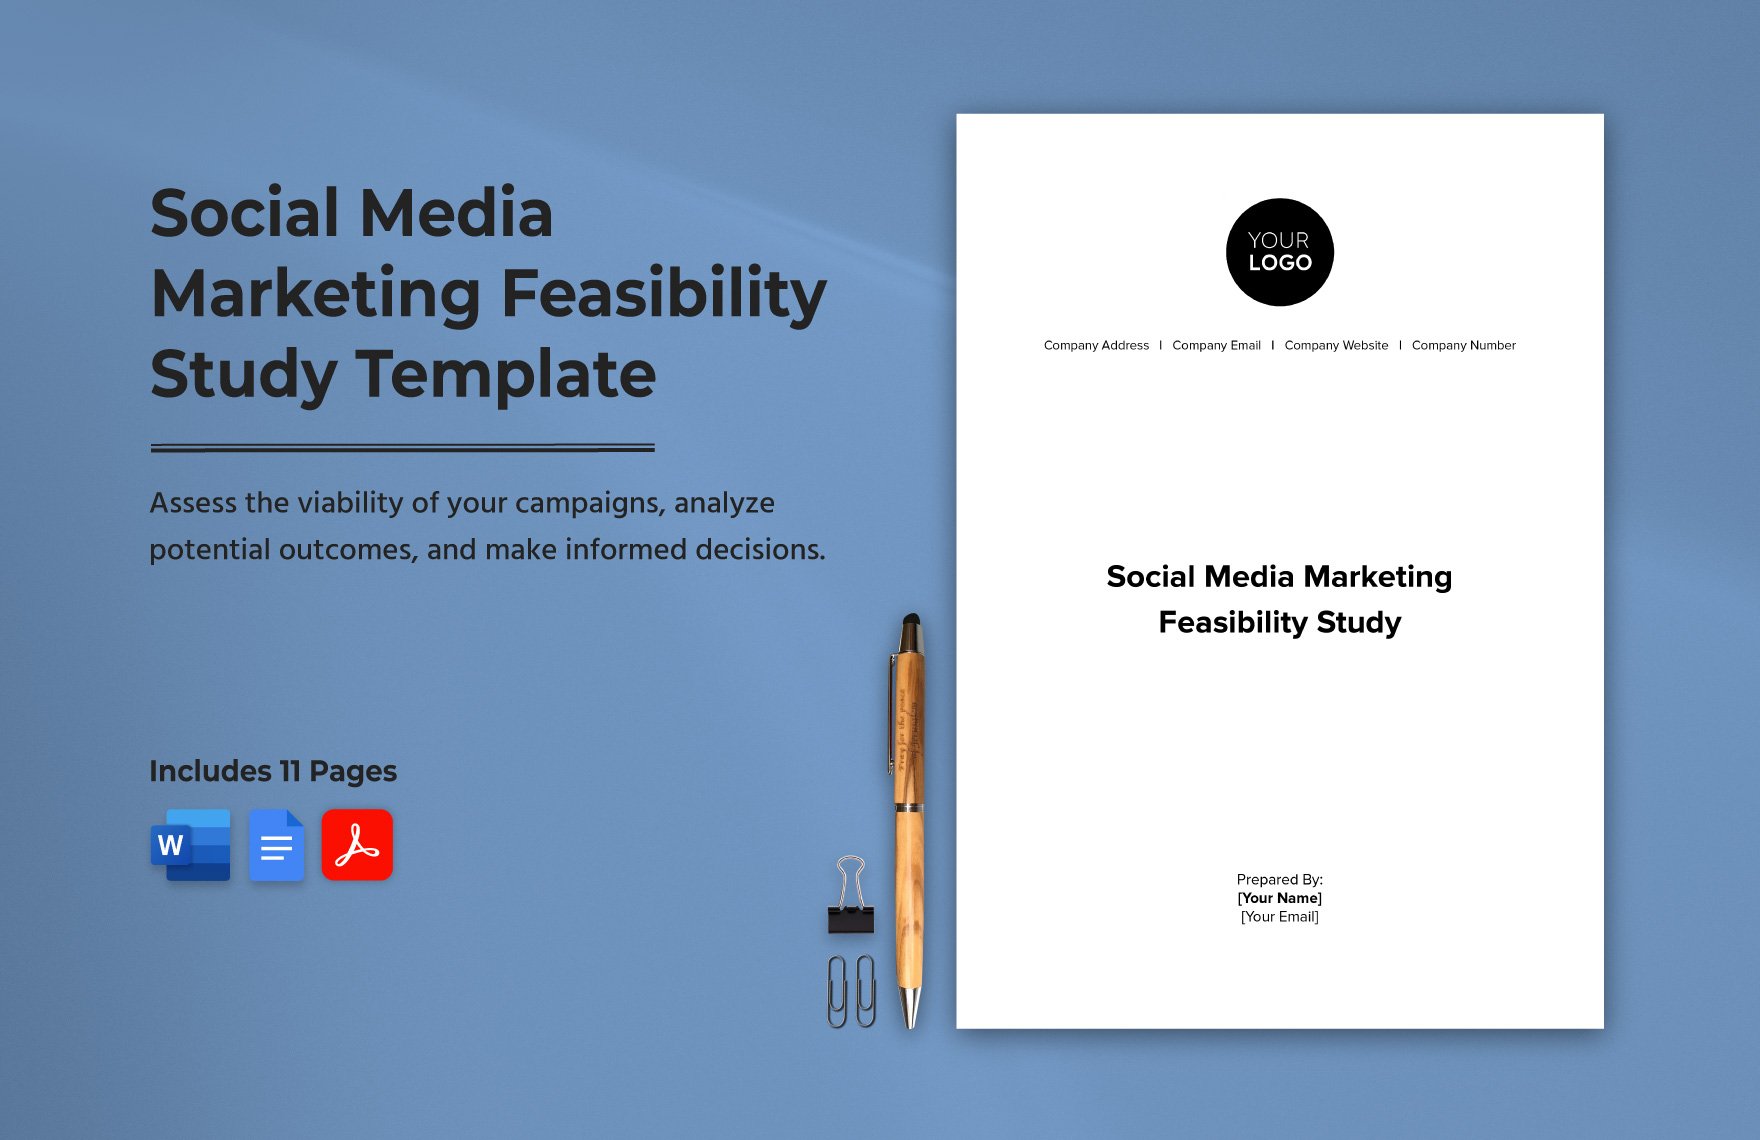 Social Media Marketing Feasibility Study Template